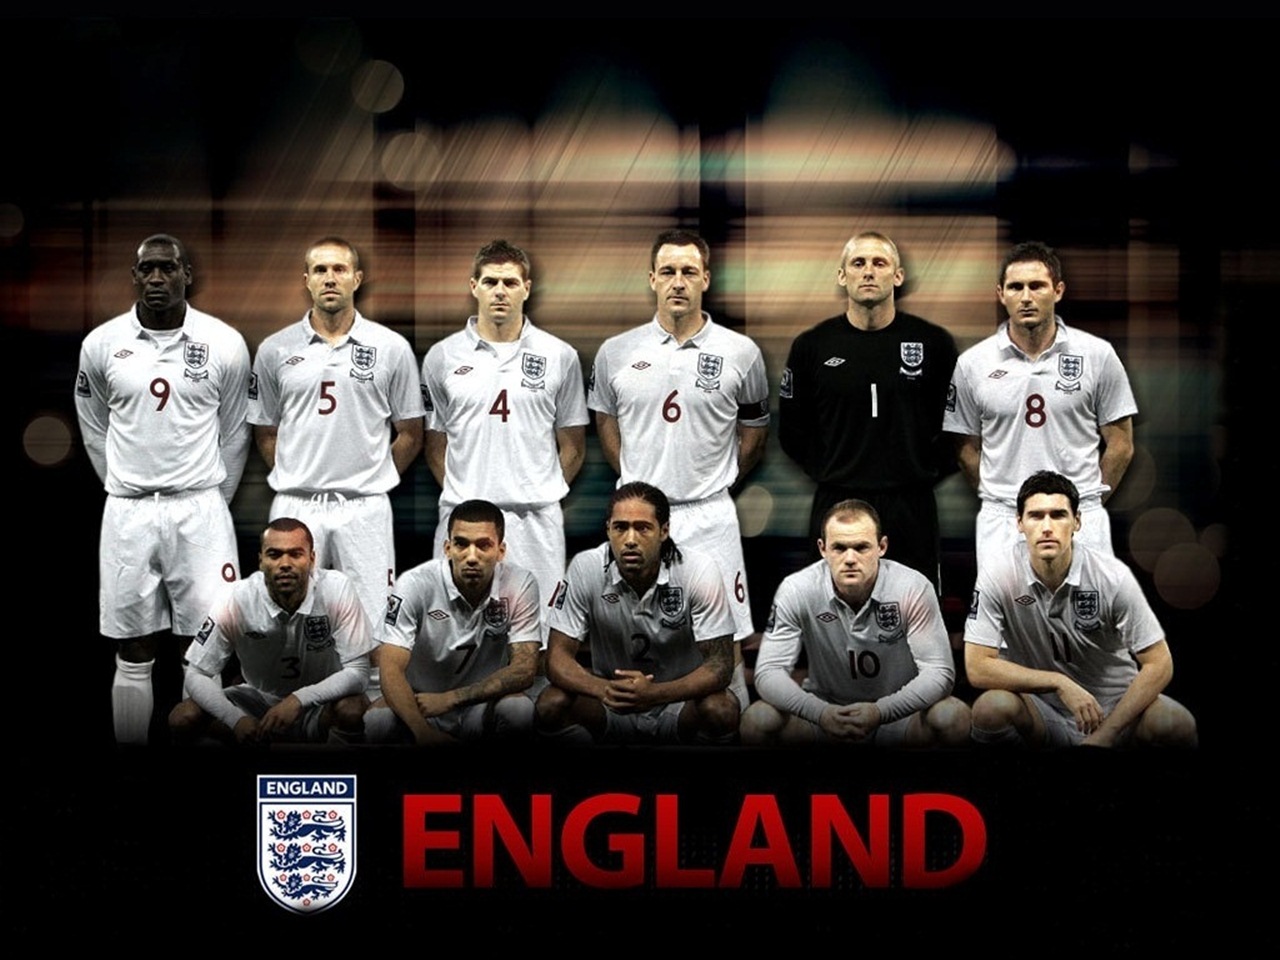 45+] England Football Team Wallpaper - WallpaperSafari